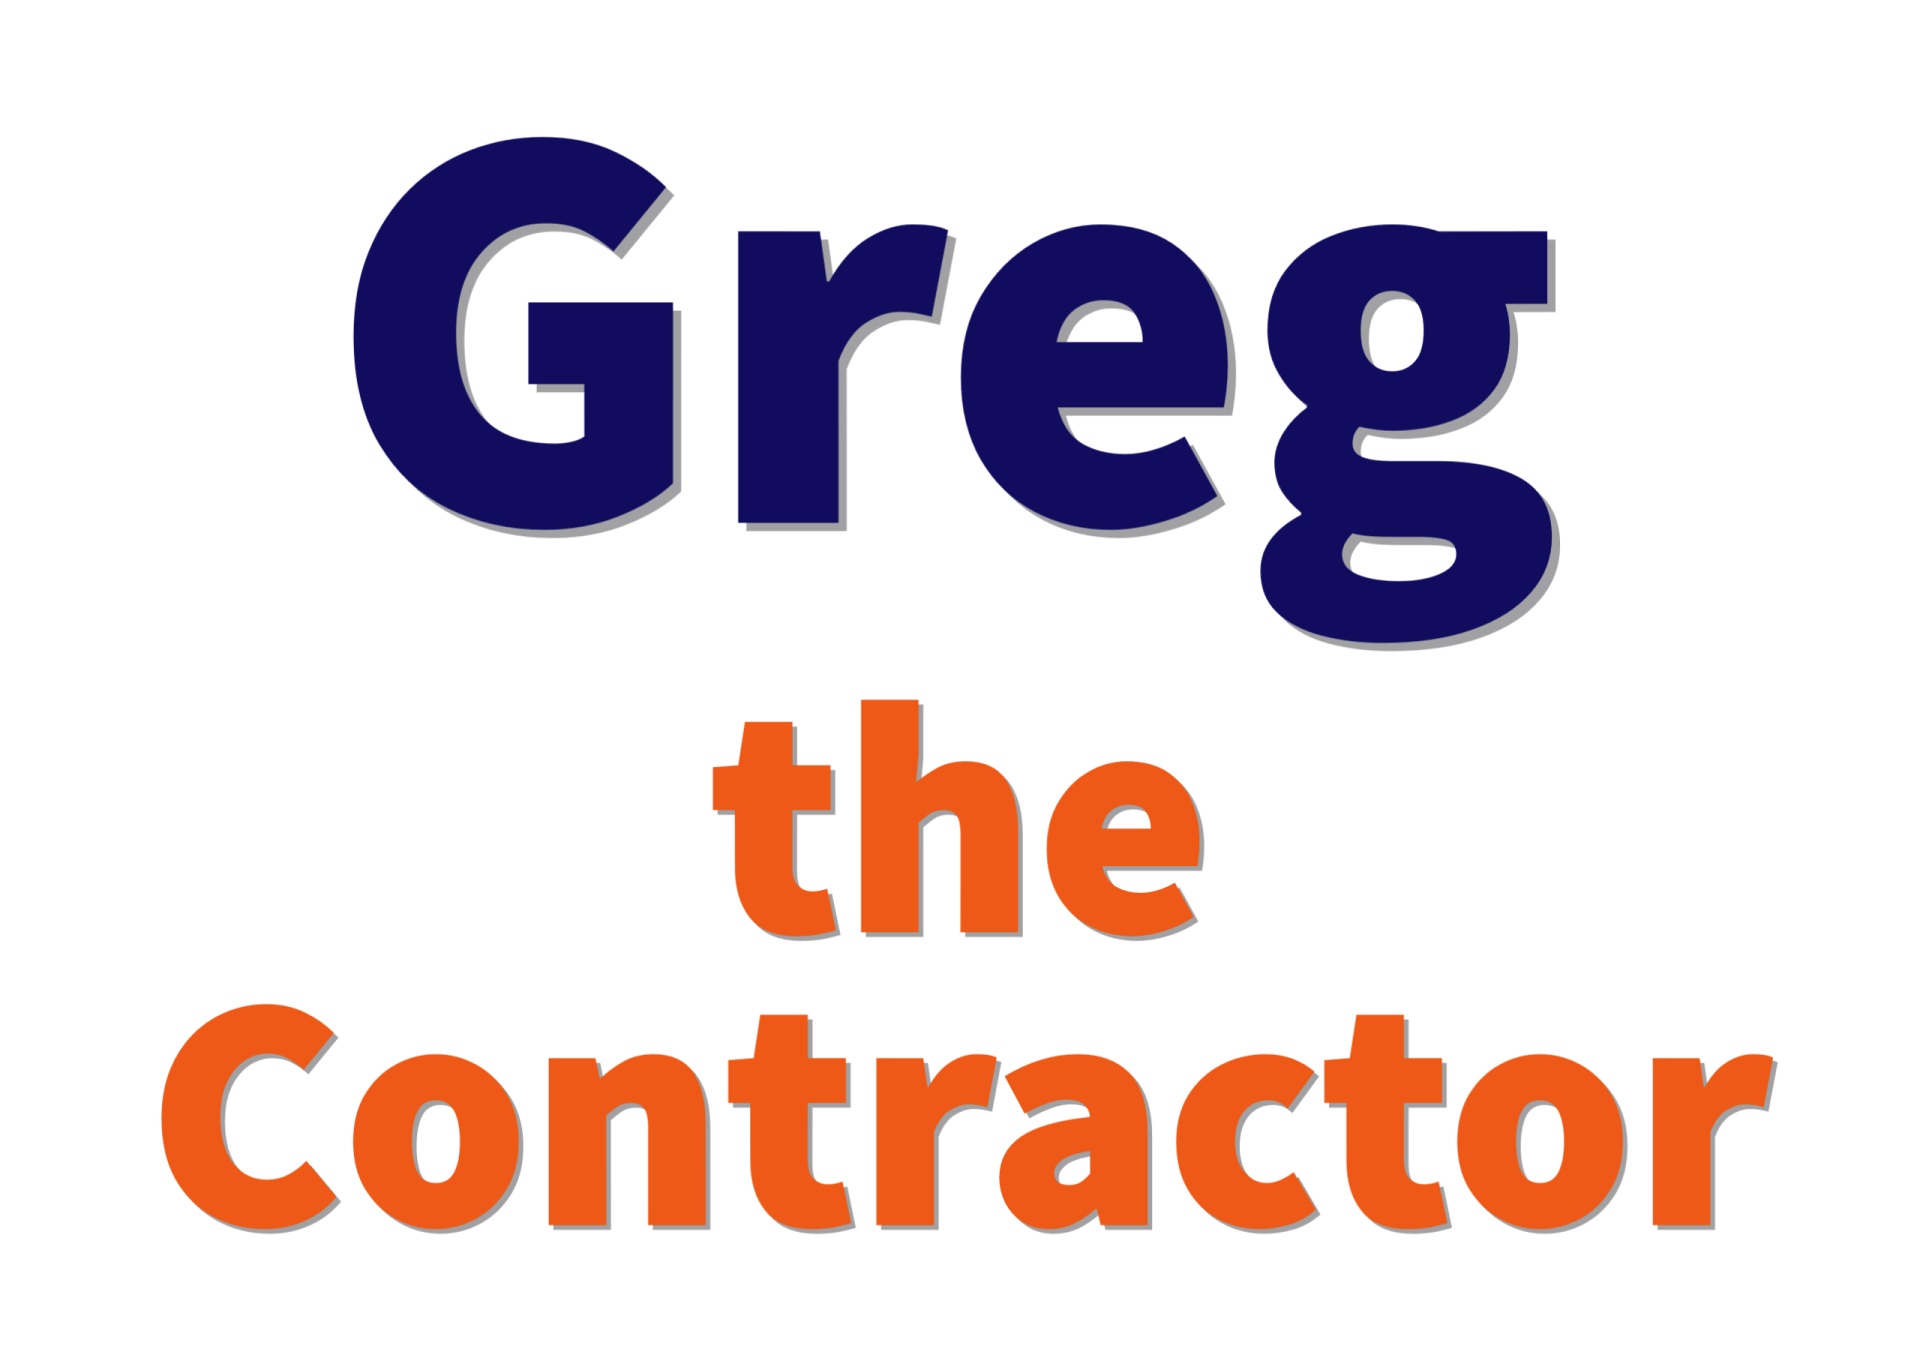 Greg the Contractor Logo 2